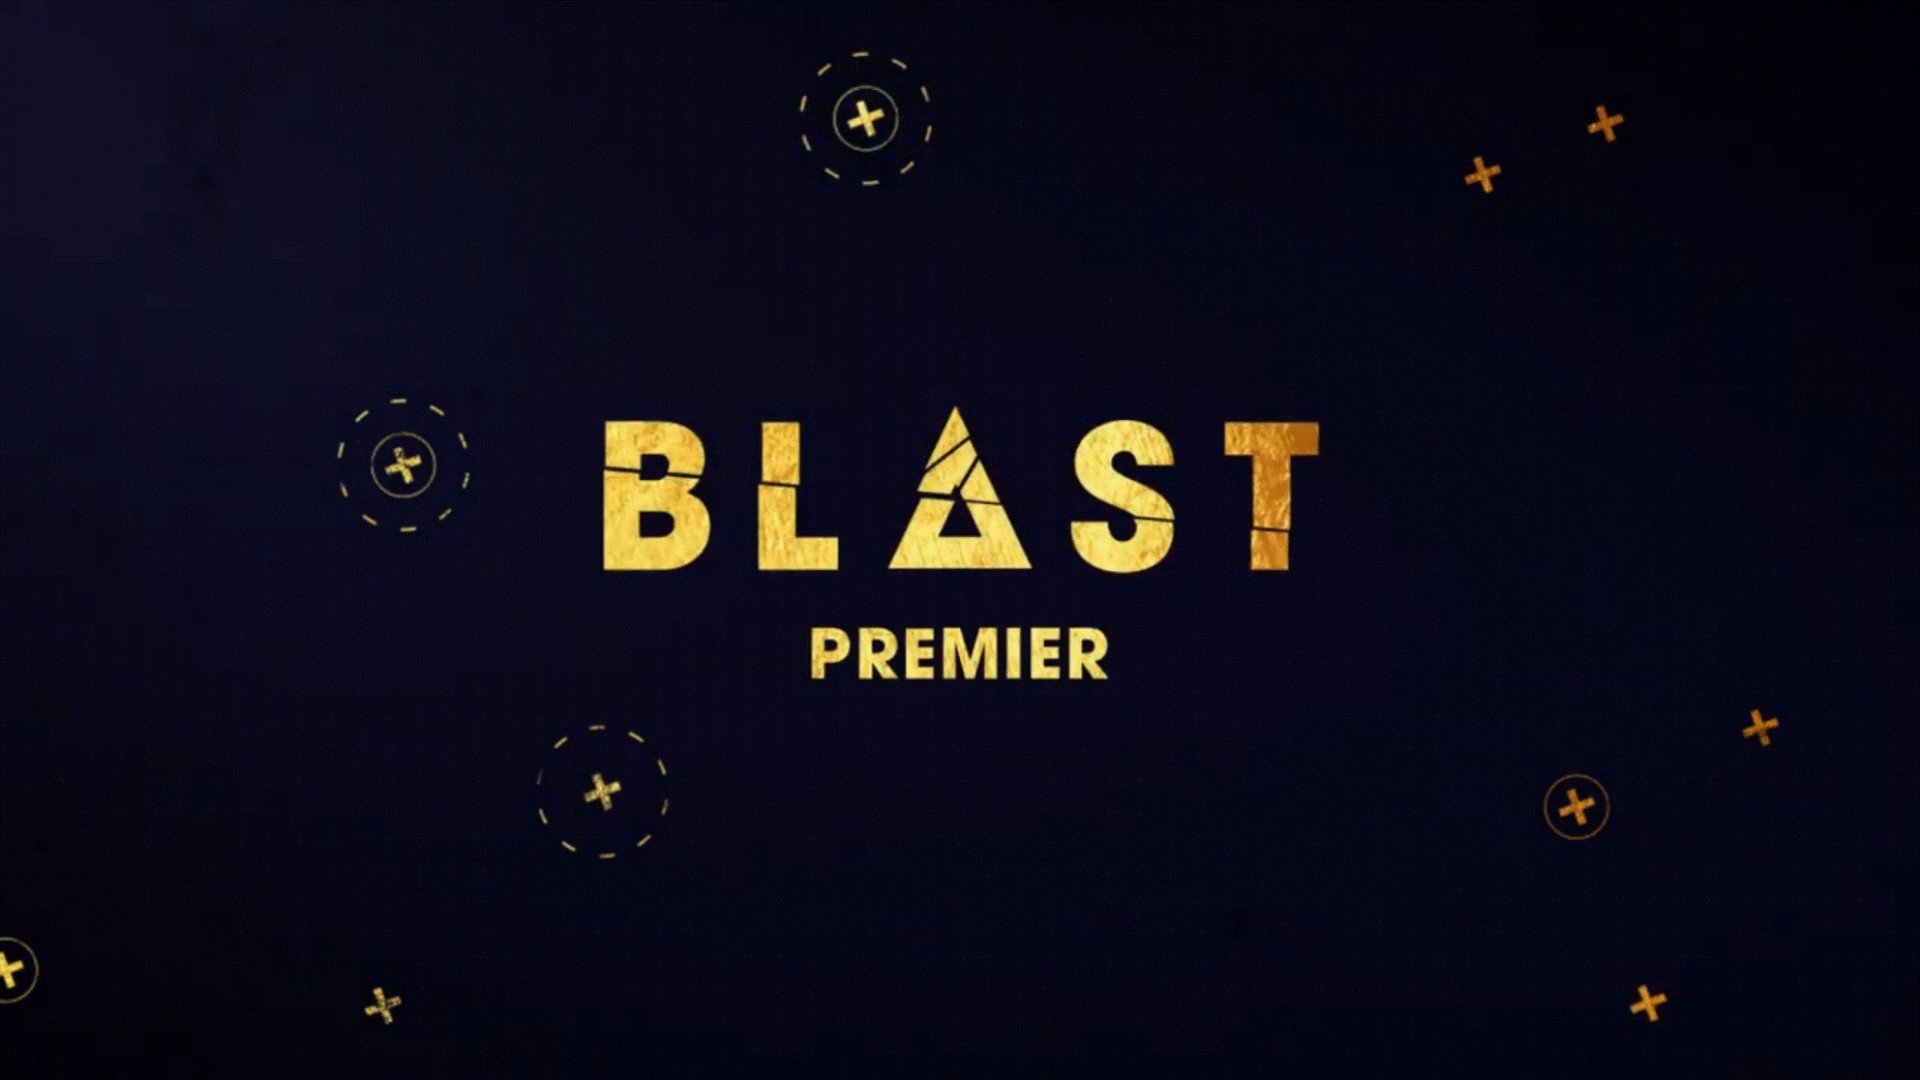 BLAST Premier Fall 2021 Groups обзор предстоящего турнира по CSGO